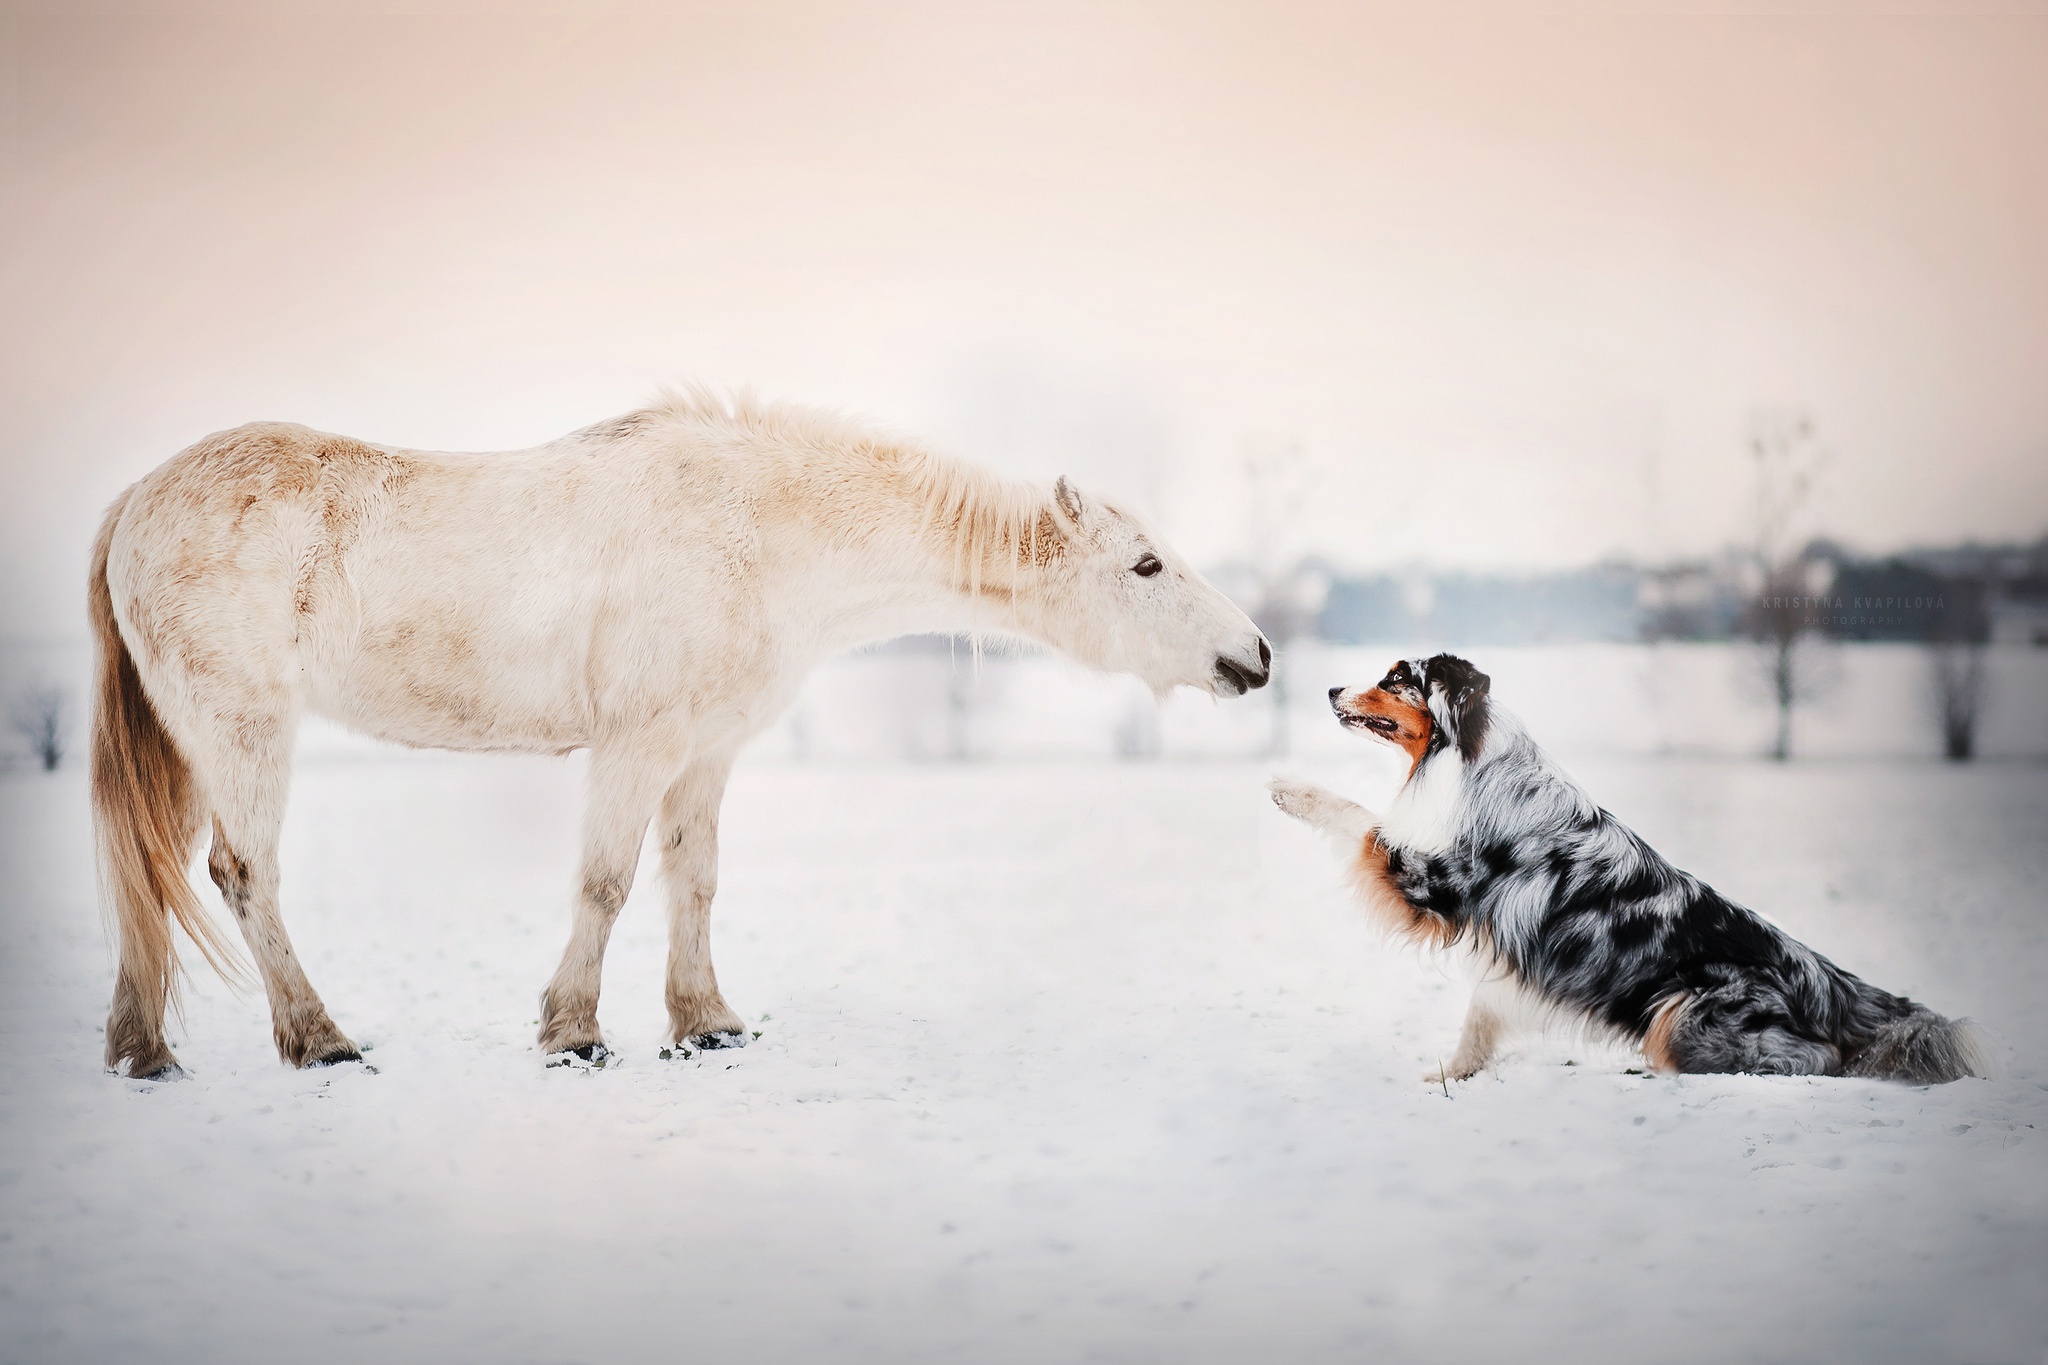 General 2048x1365 snow animals horse dog bright winter white